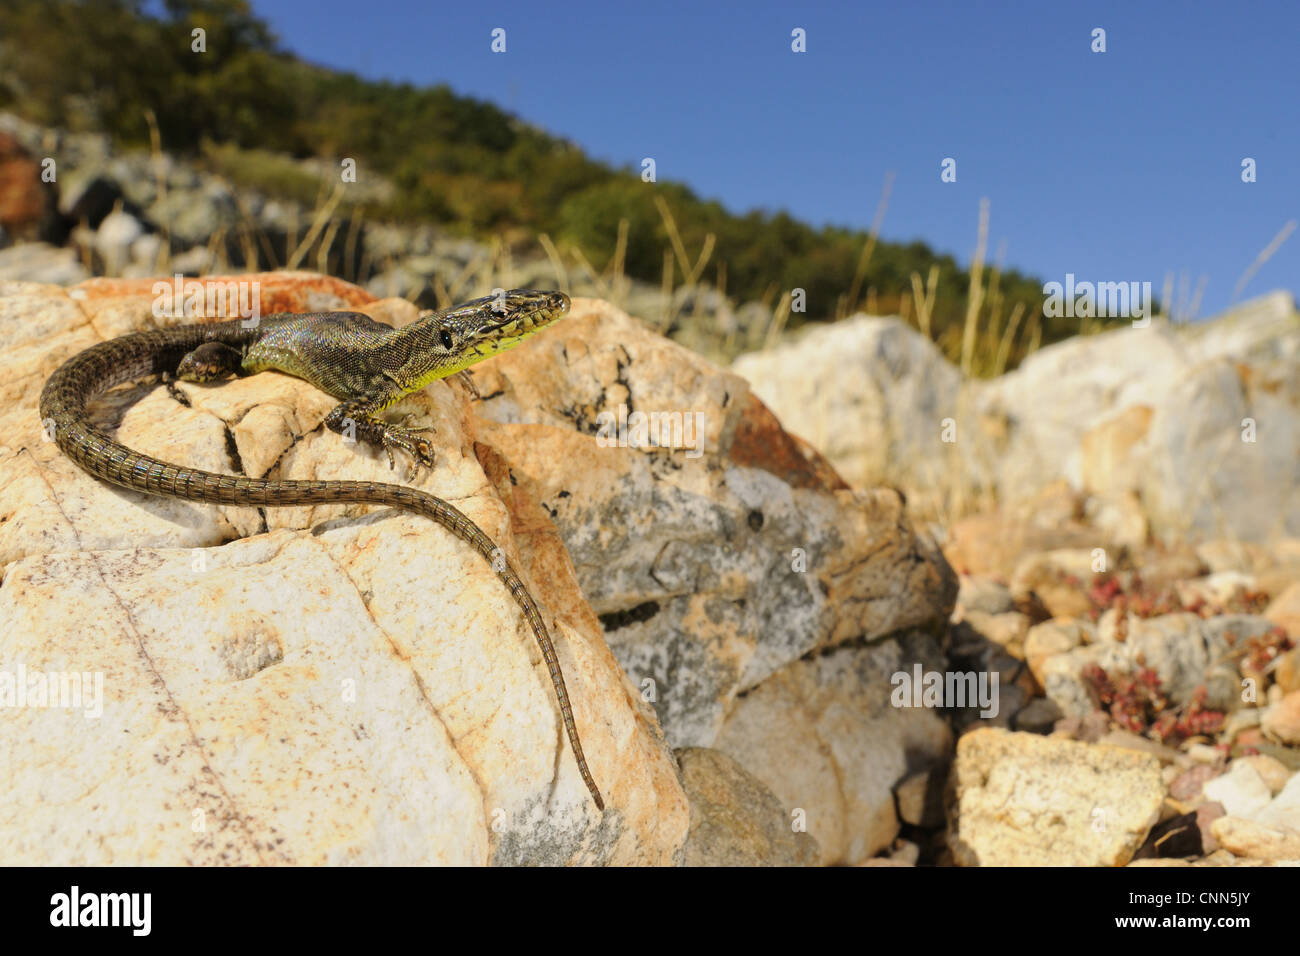 Pena de Francia Rock Lizard (Iberolacerta martinezricai) adult, basking on rock in habitat, Spain, october Stock Photo